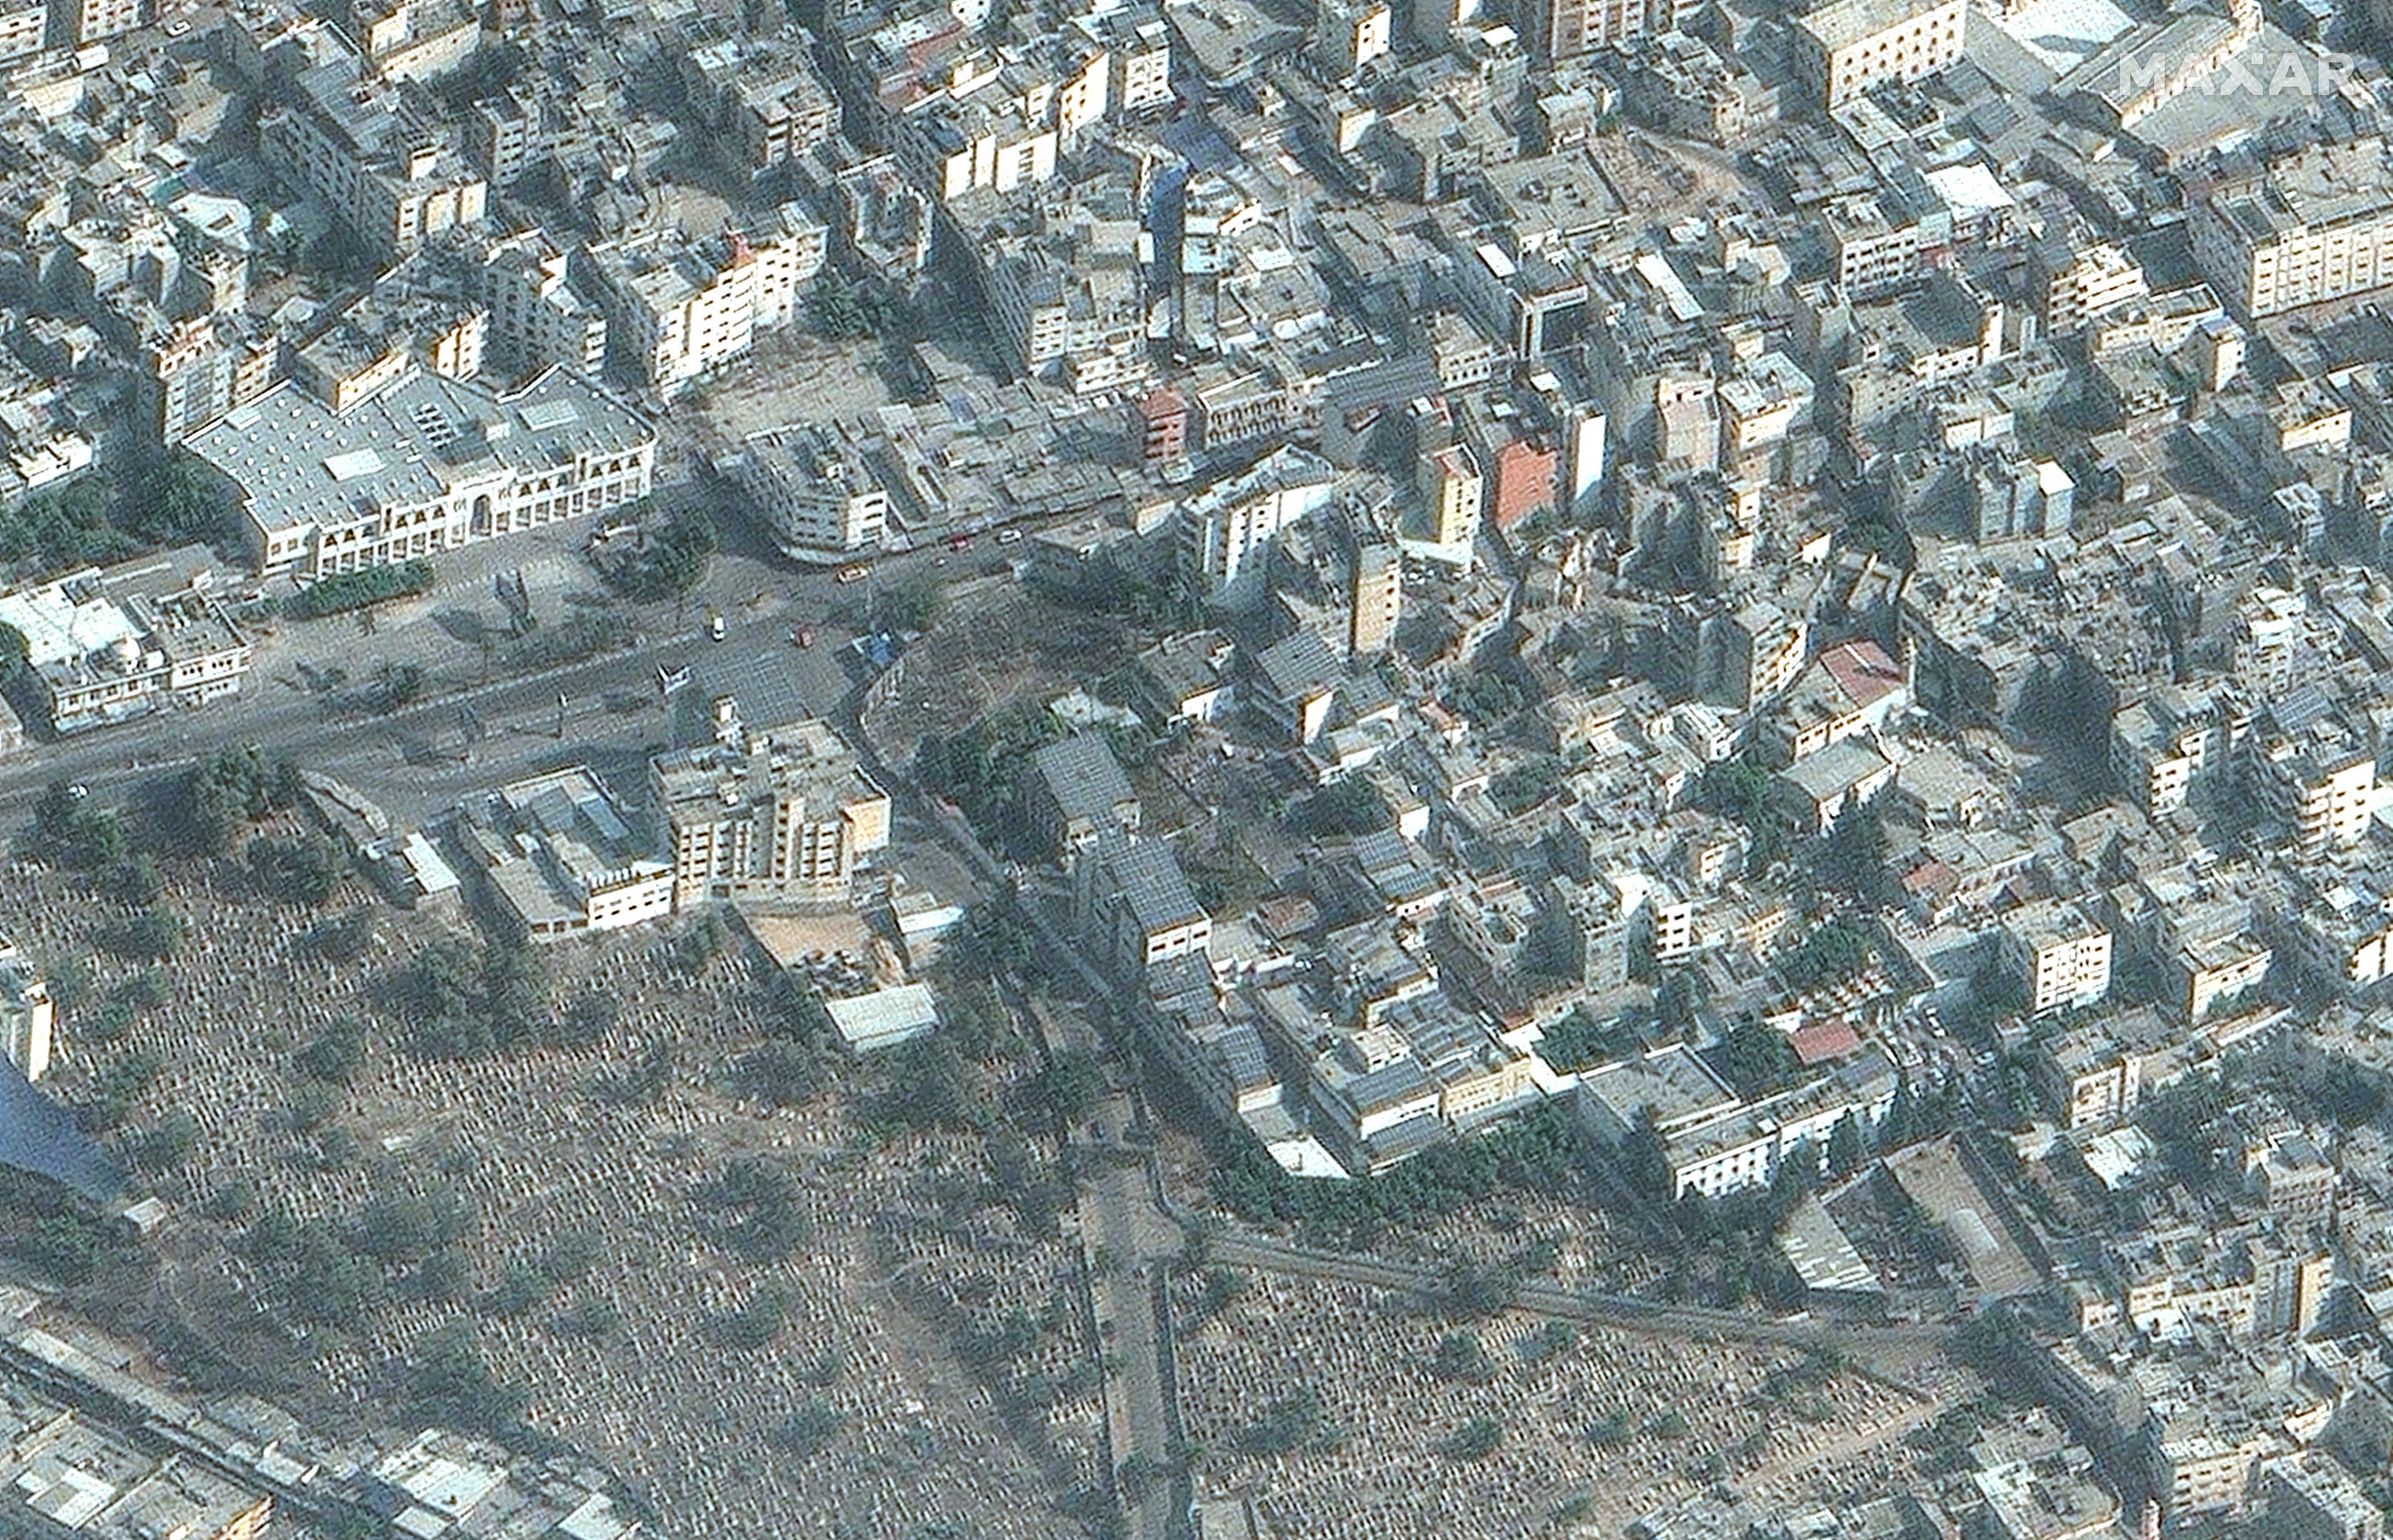 A satellite image shows Al-Ahli hospital